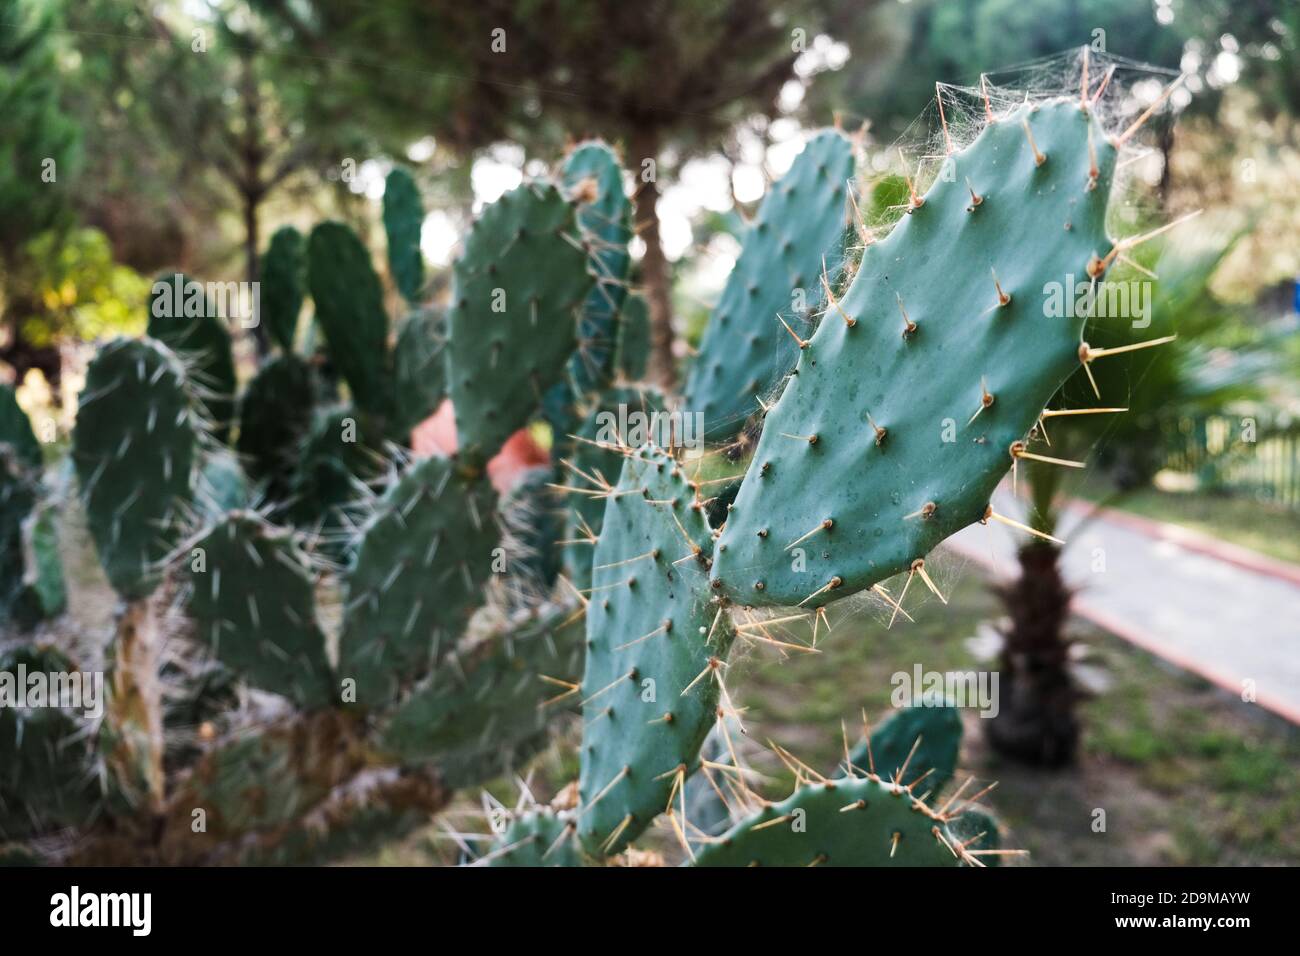 Campo cieca di cactus di pera di prickly. Vista closeup di foglie di cactus verdi con spine affilate. Splendido sfondo tropicale. Cactus naturali in crescita all'aperto Foto Stock